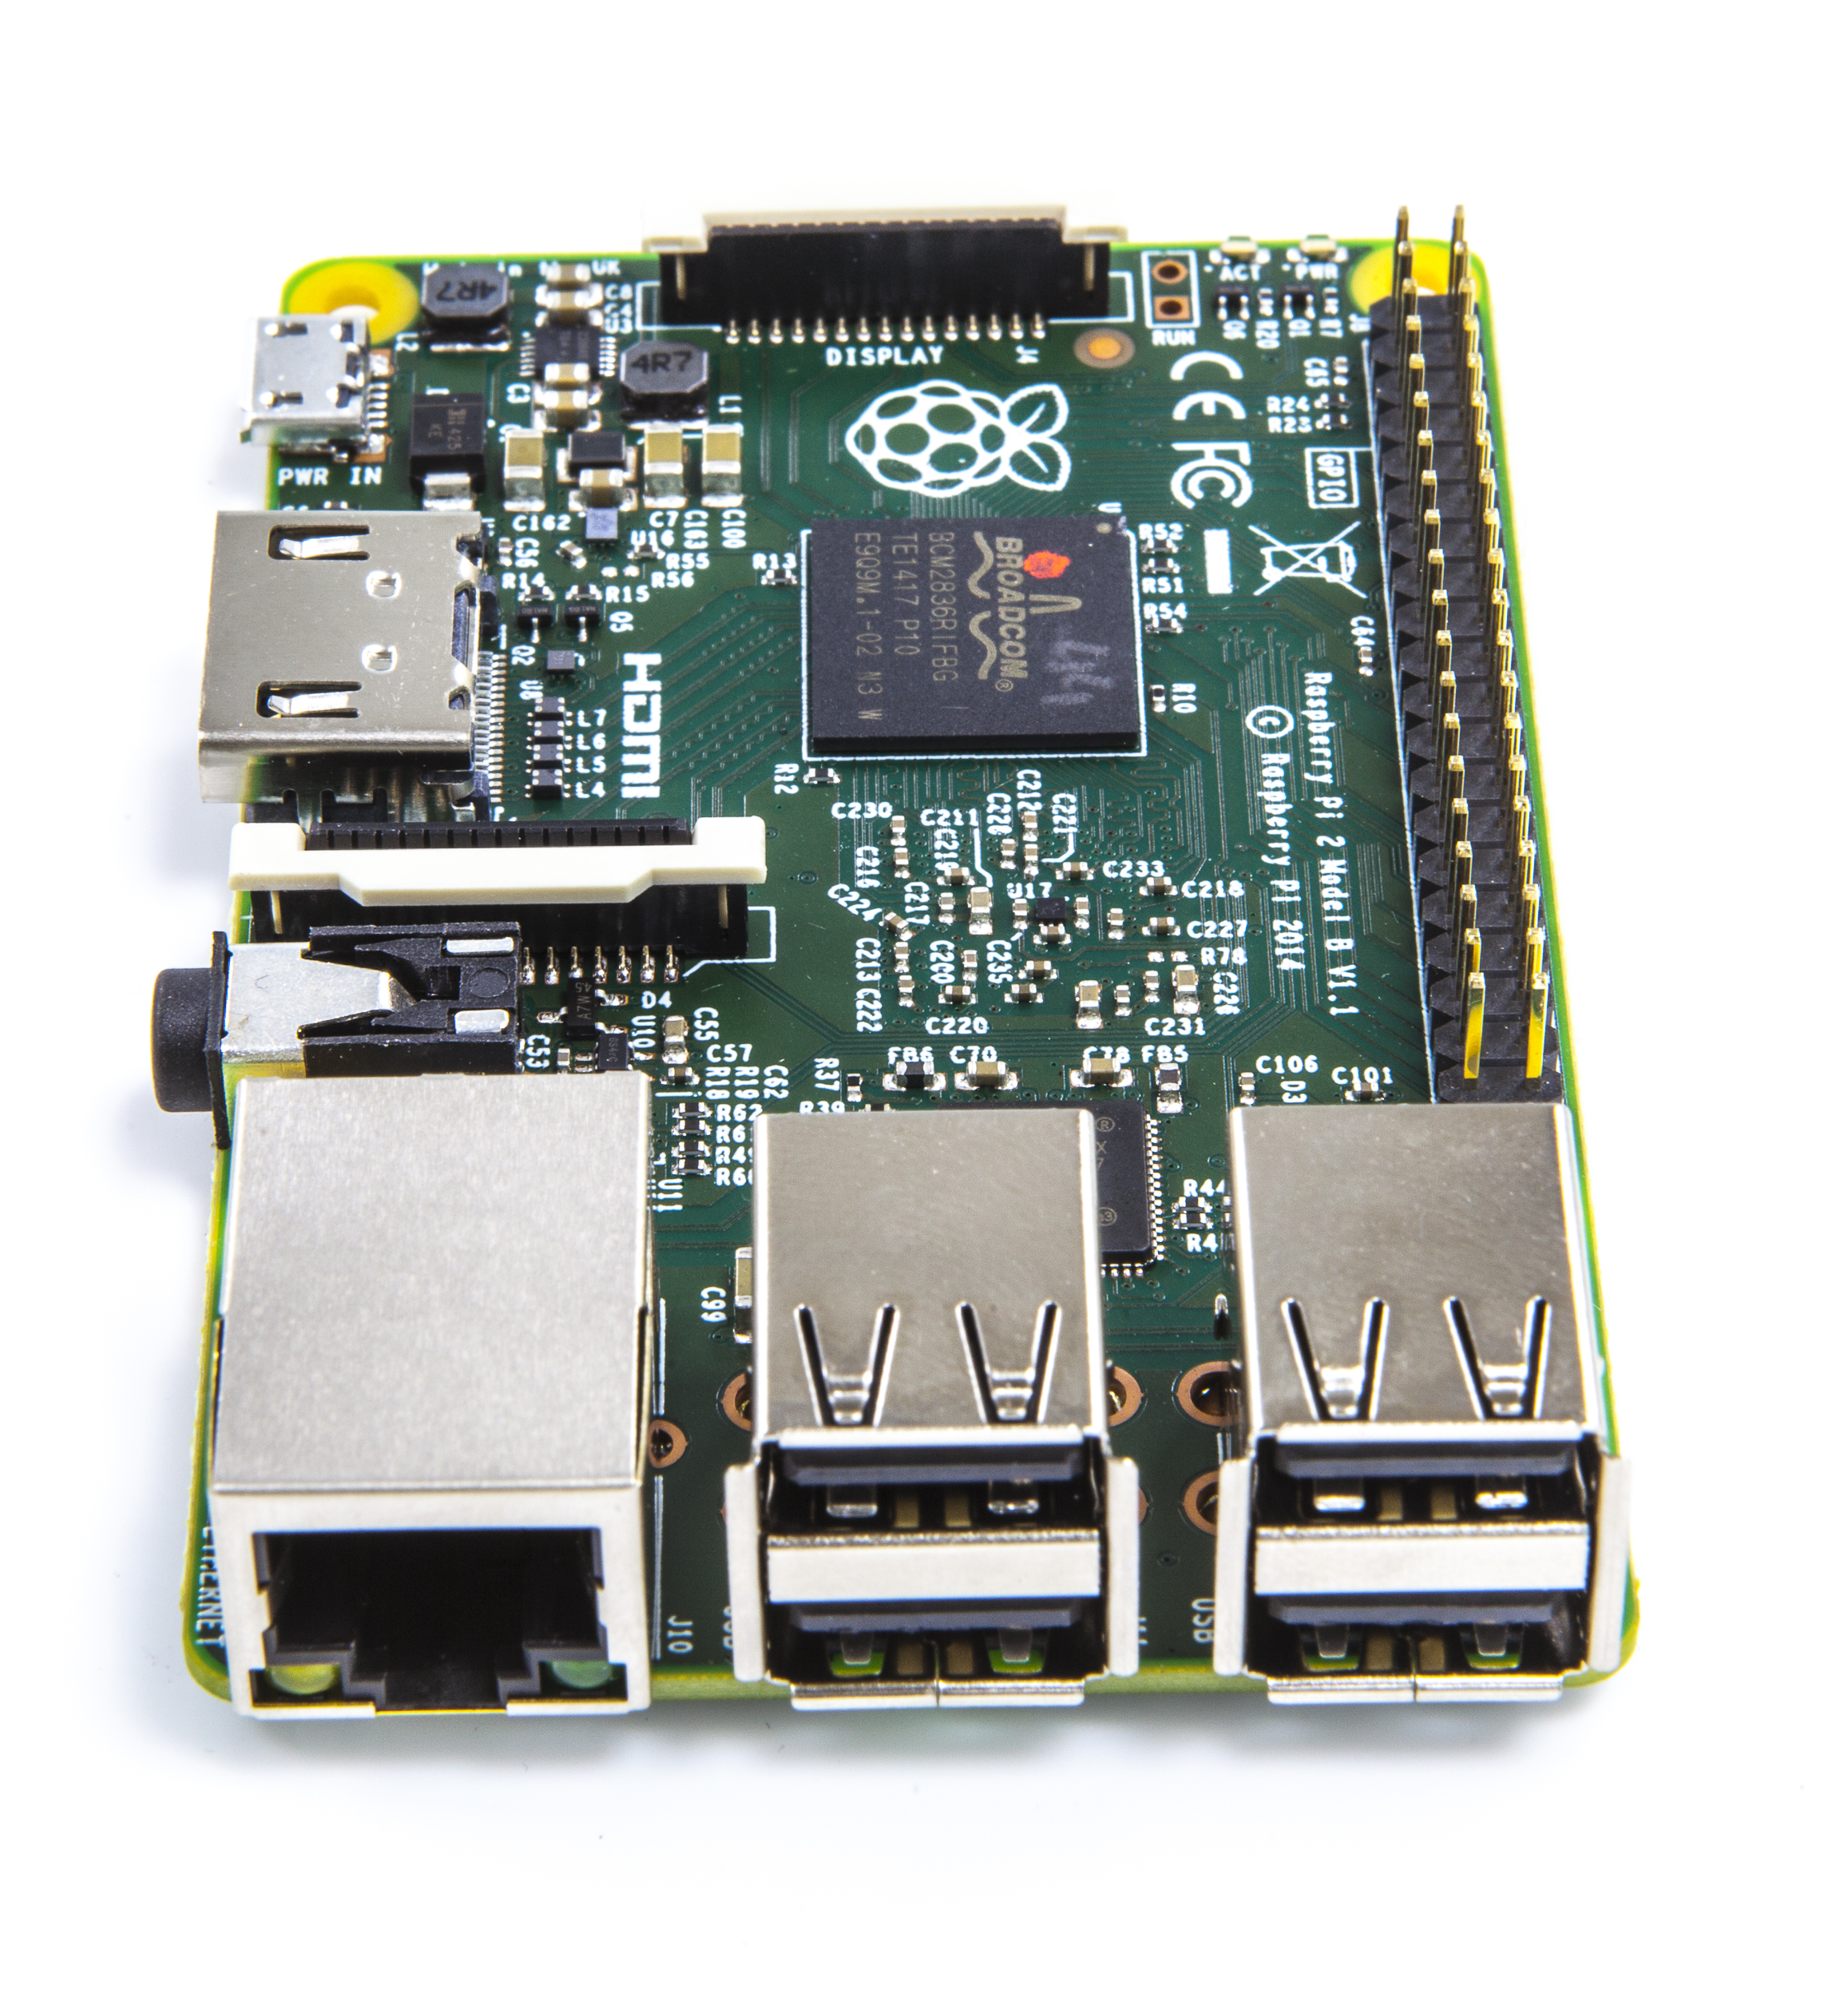 Raspberry Pi 2 arrives with quad-core CPU, 1GB RAM, same $35 price